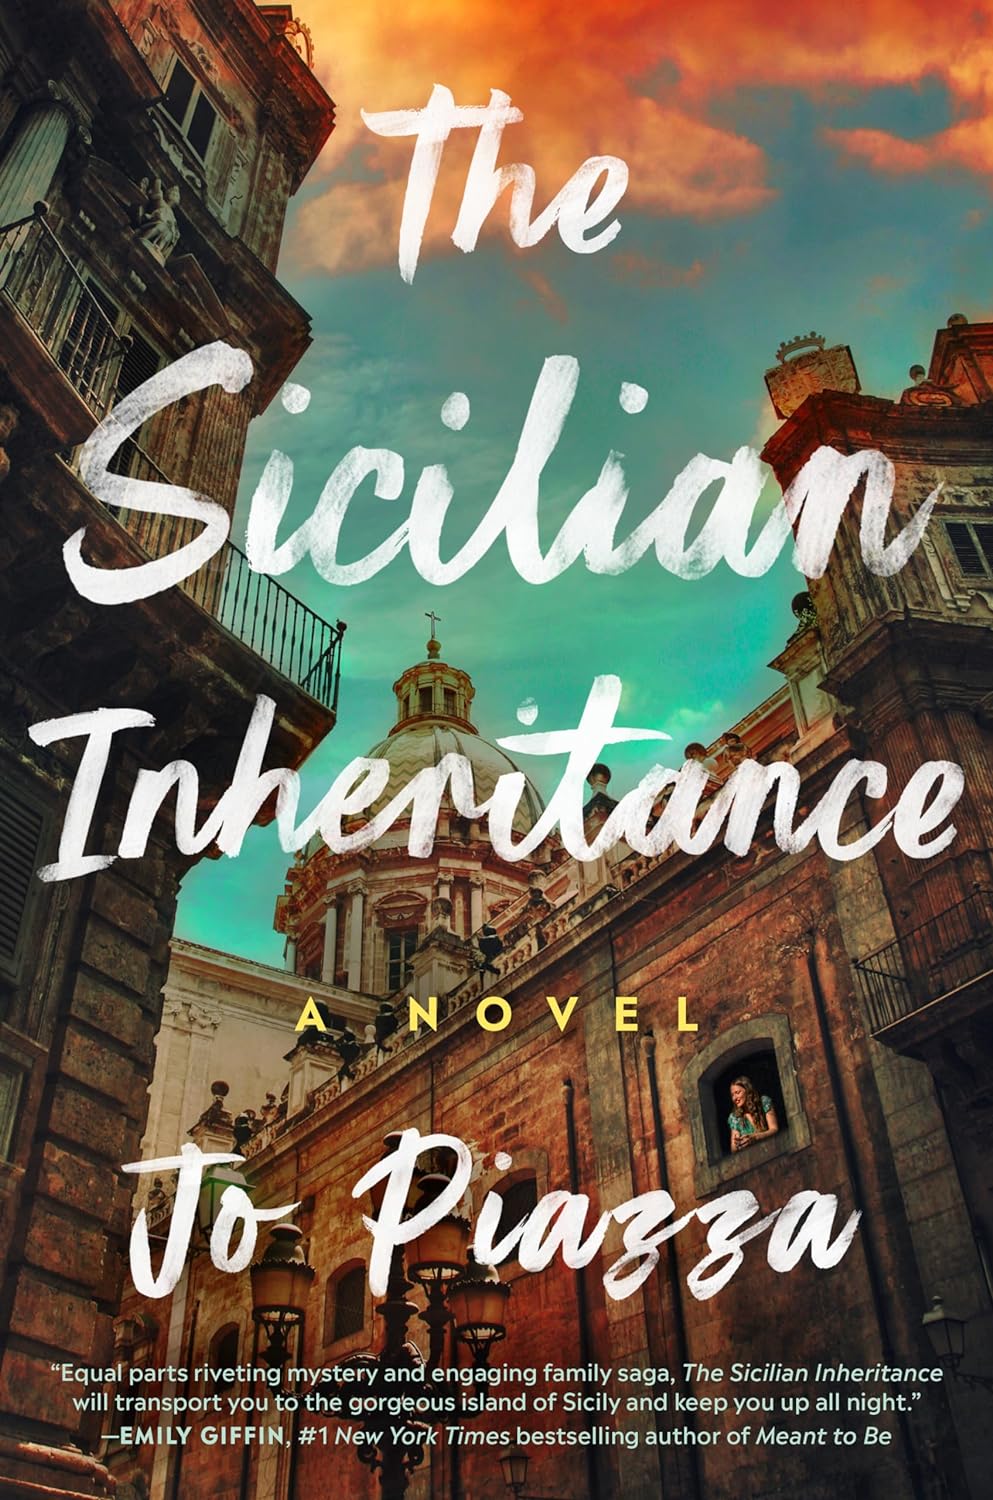 The Sicilian Inheritance